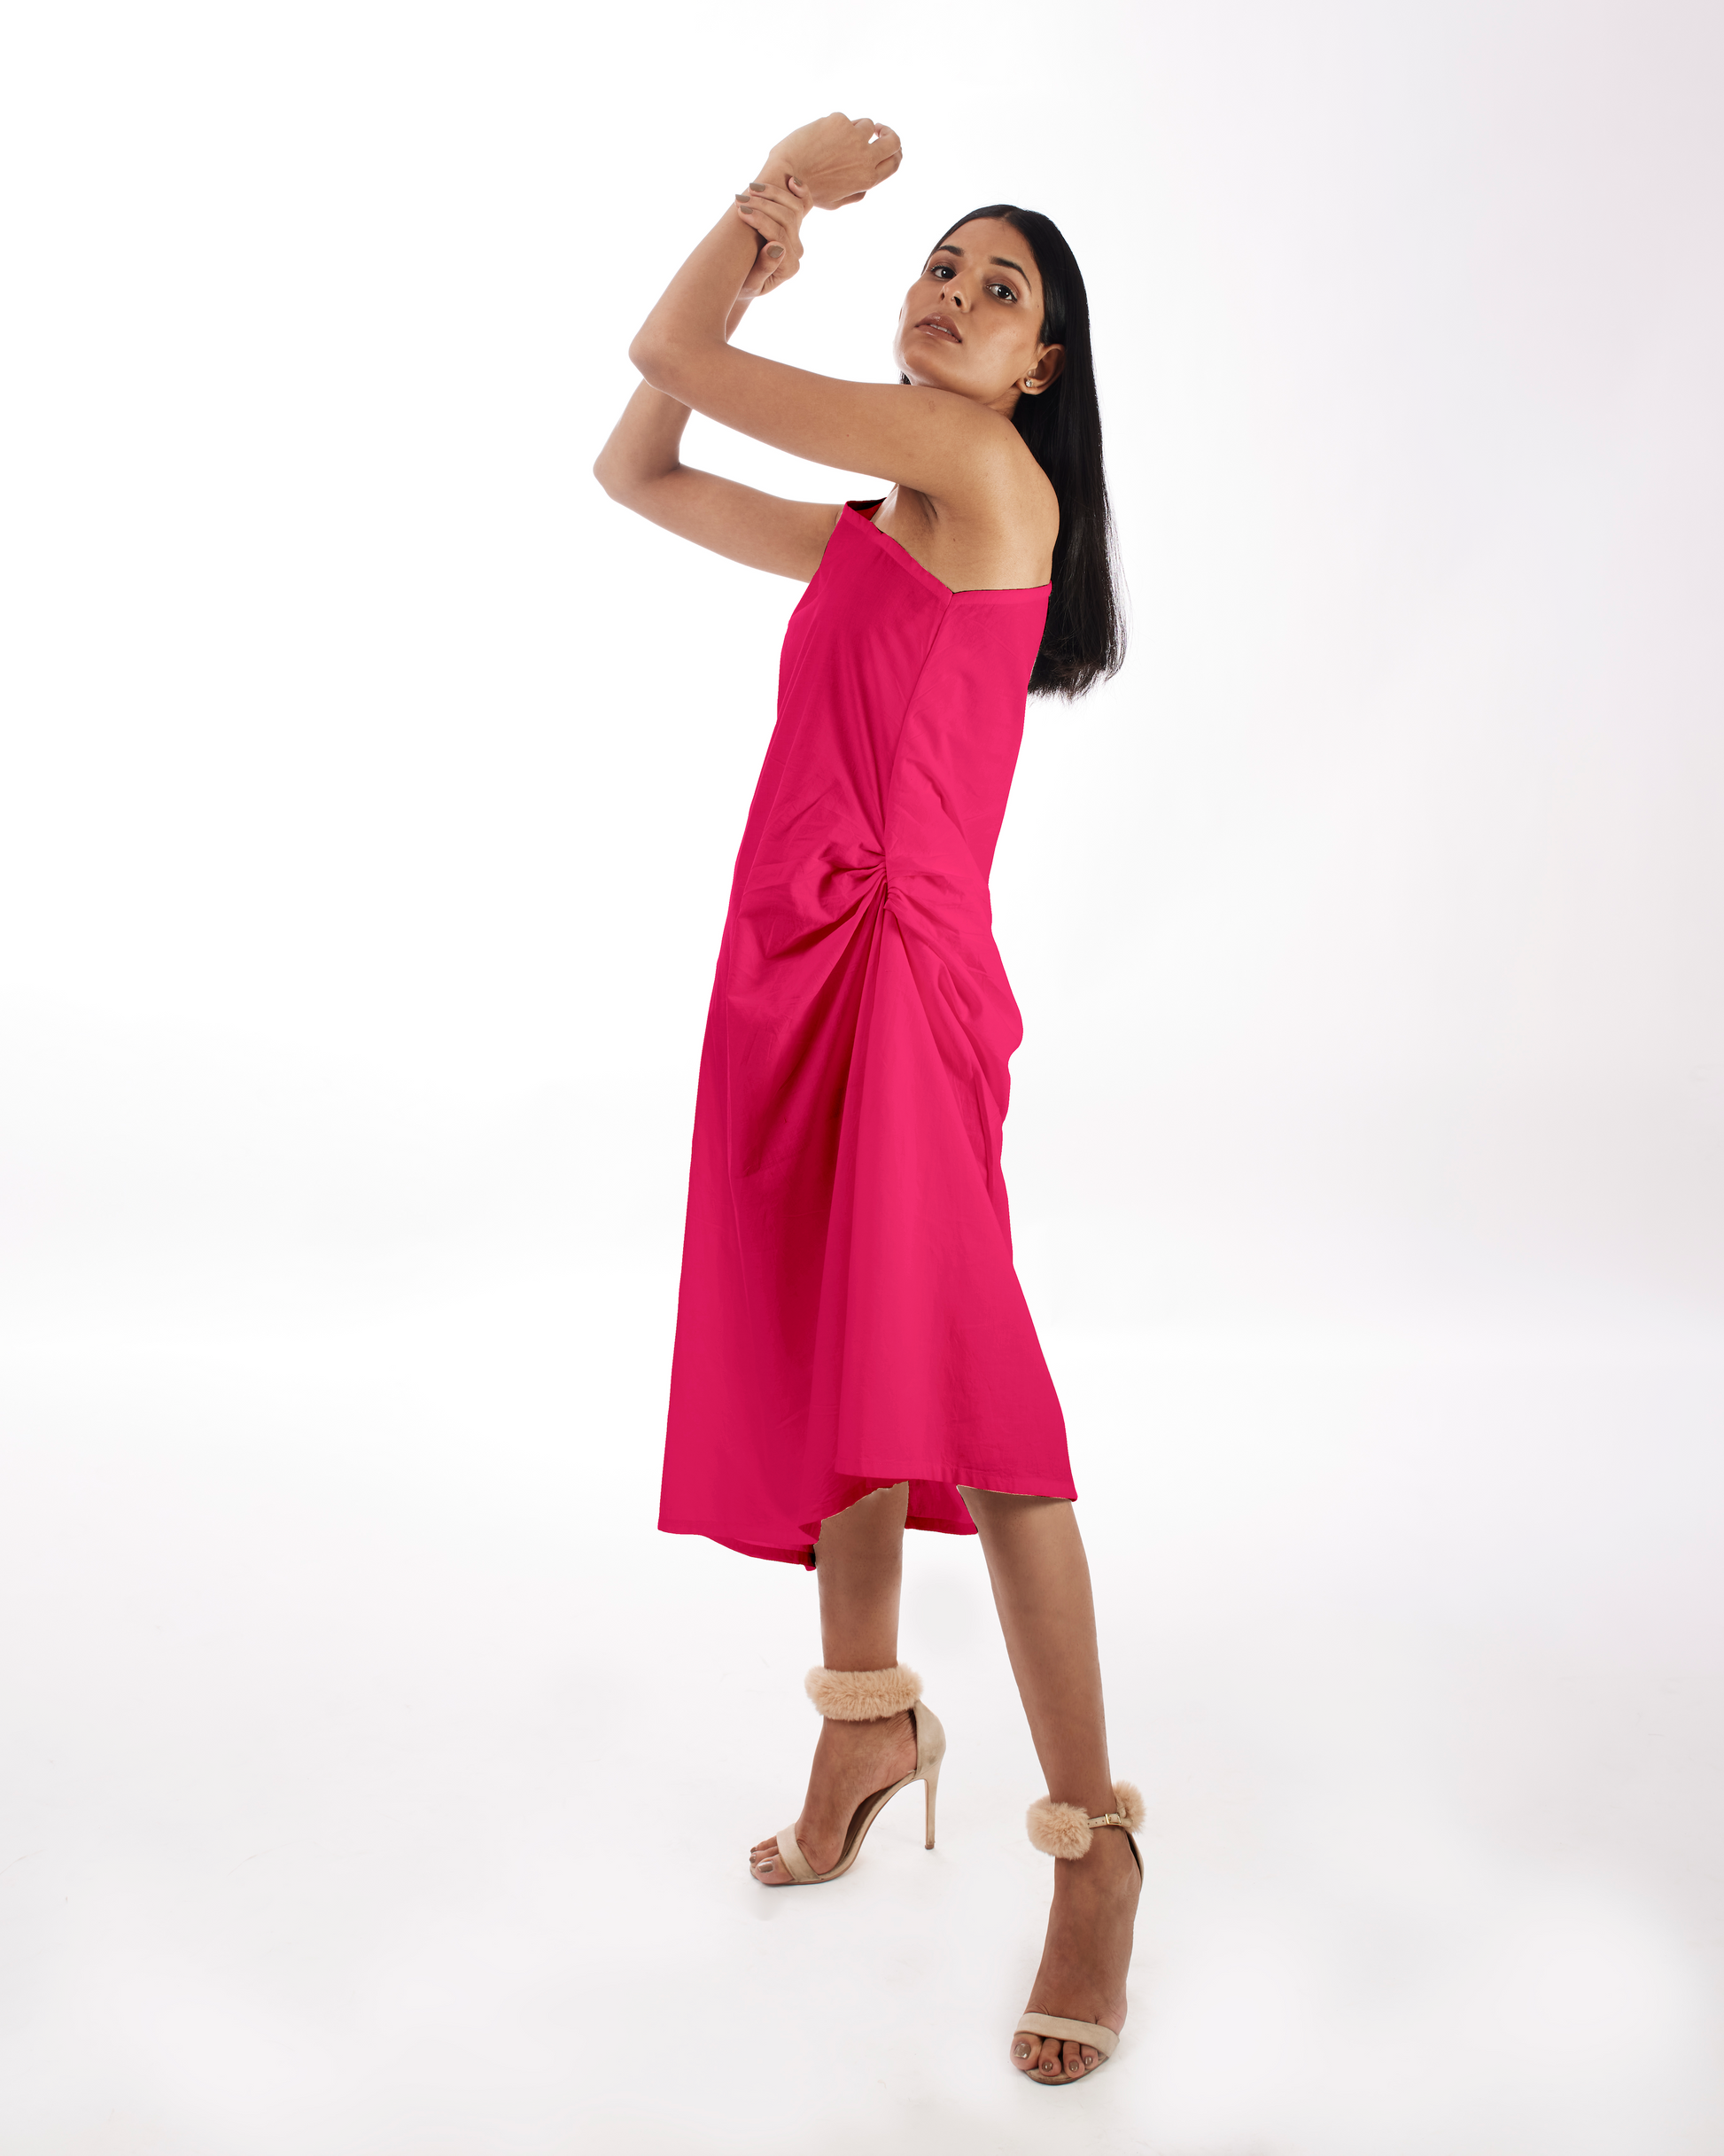 Pink One Shoulder Dress at Kamakhyaa by Kamakhyaa. This item is 100% pure cotton, Evening Wear, KKYSS, Natural, One Shoulder Dresses, Pink, Regular Fit, Solids, Summer Sutra, Womenswear